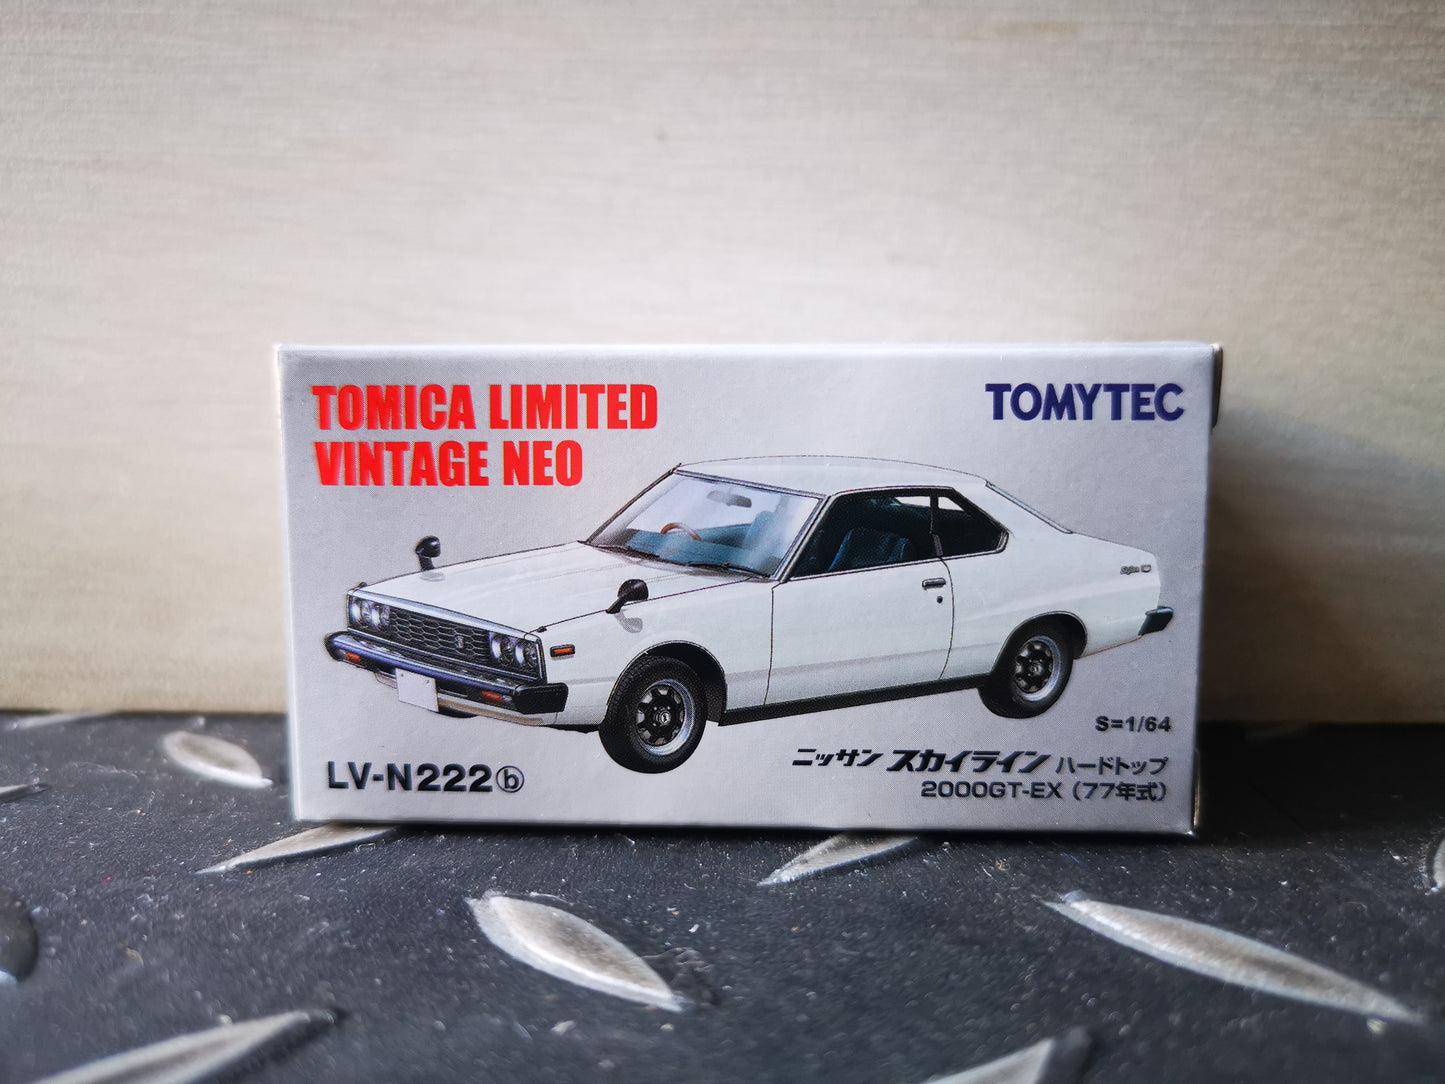 Tomica Limited Vintage Neo LV-N222b Nissan Skyline Hardtop 2000GT-EX 77' (White) Scale1/64